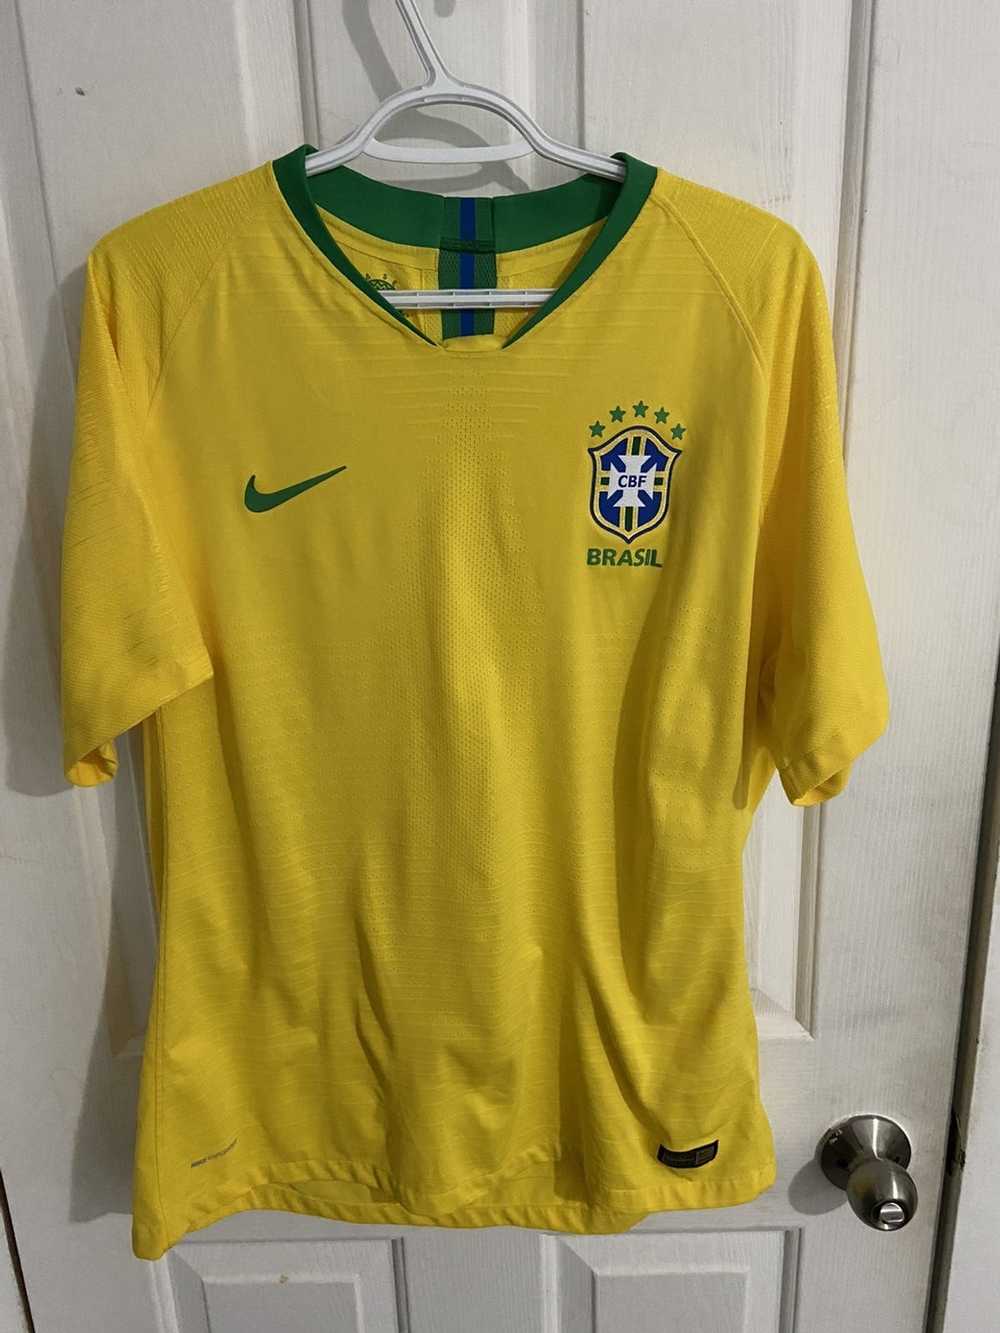 Nike Brazil CBF 2018 World Cup Home Jersey - image 1